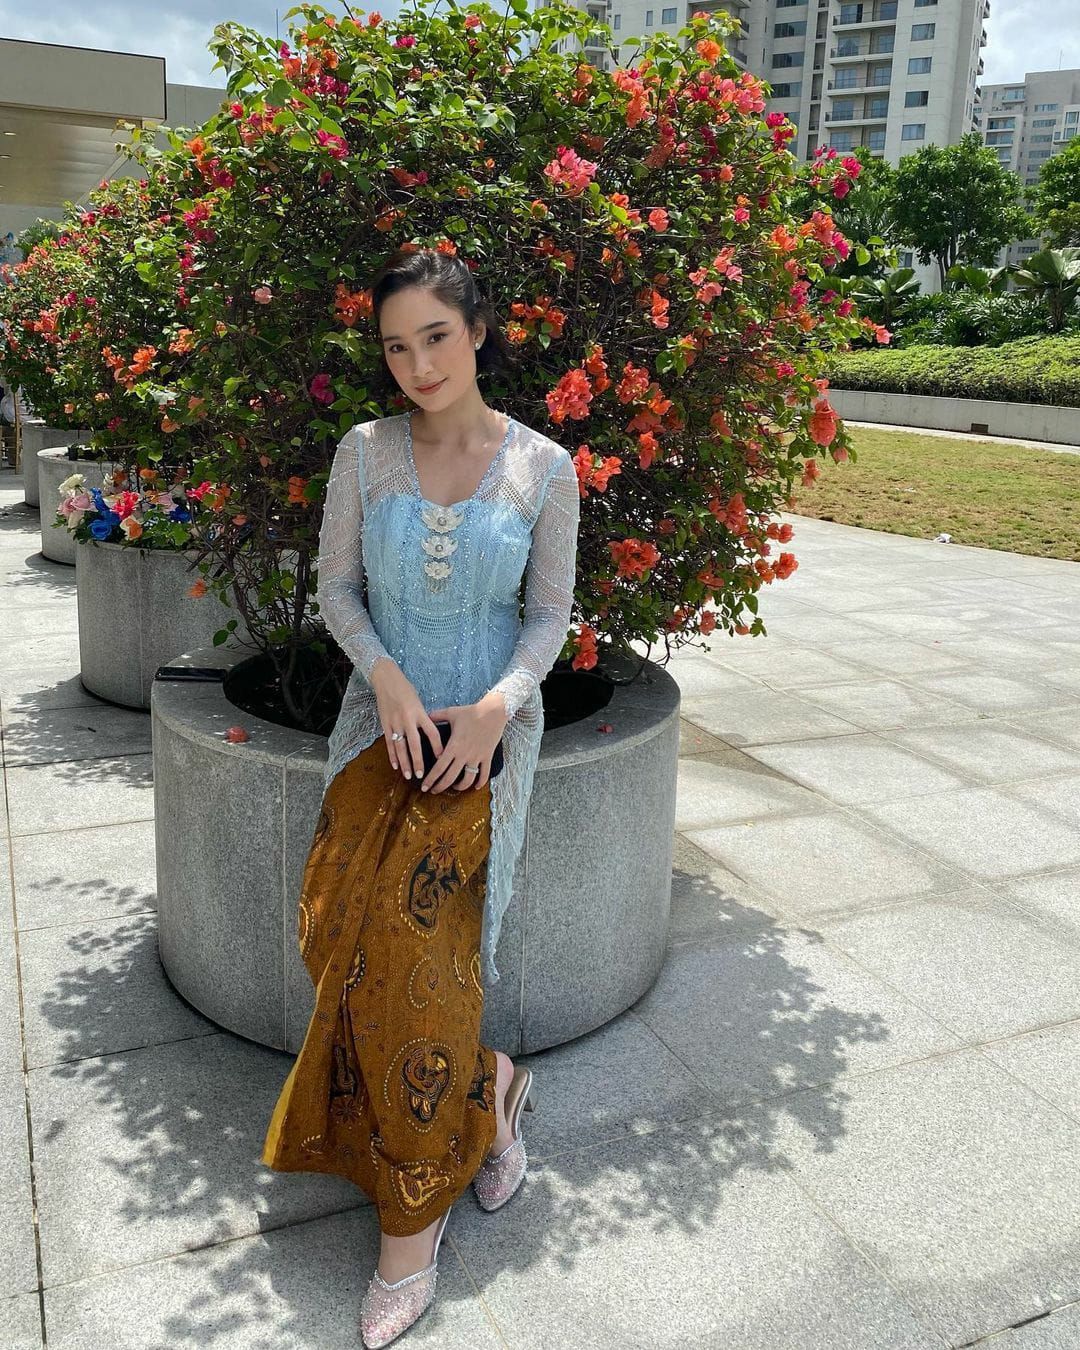 Tatjana juga cantik dalam sebuah balutan kebaya. Kebaya modern khas Jawa berwarna biru muda dengan kain dan juga pantofel pink.Source: Instagram.com/tatjanasaphira